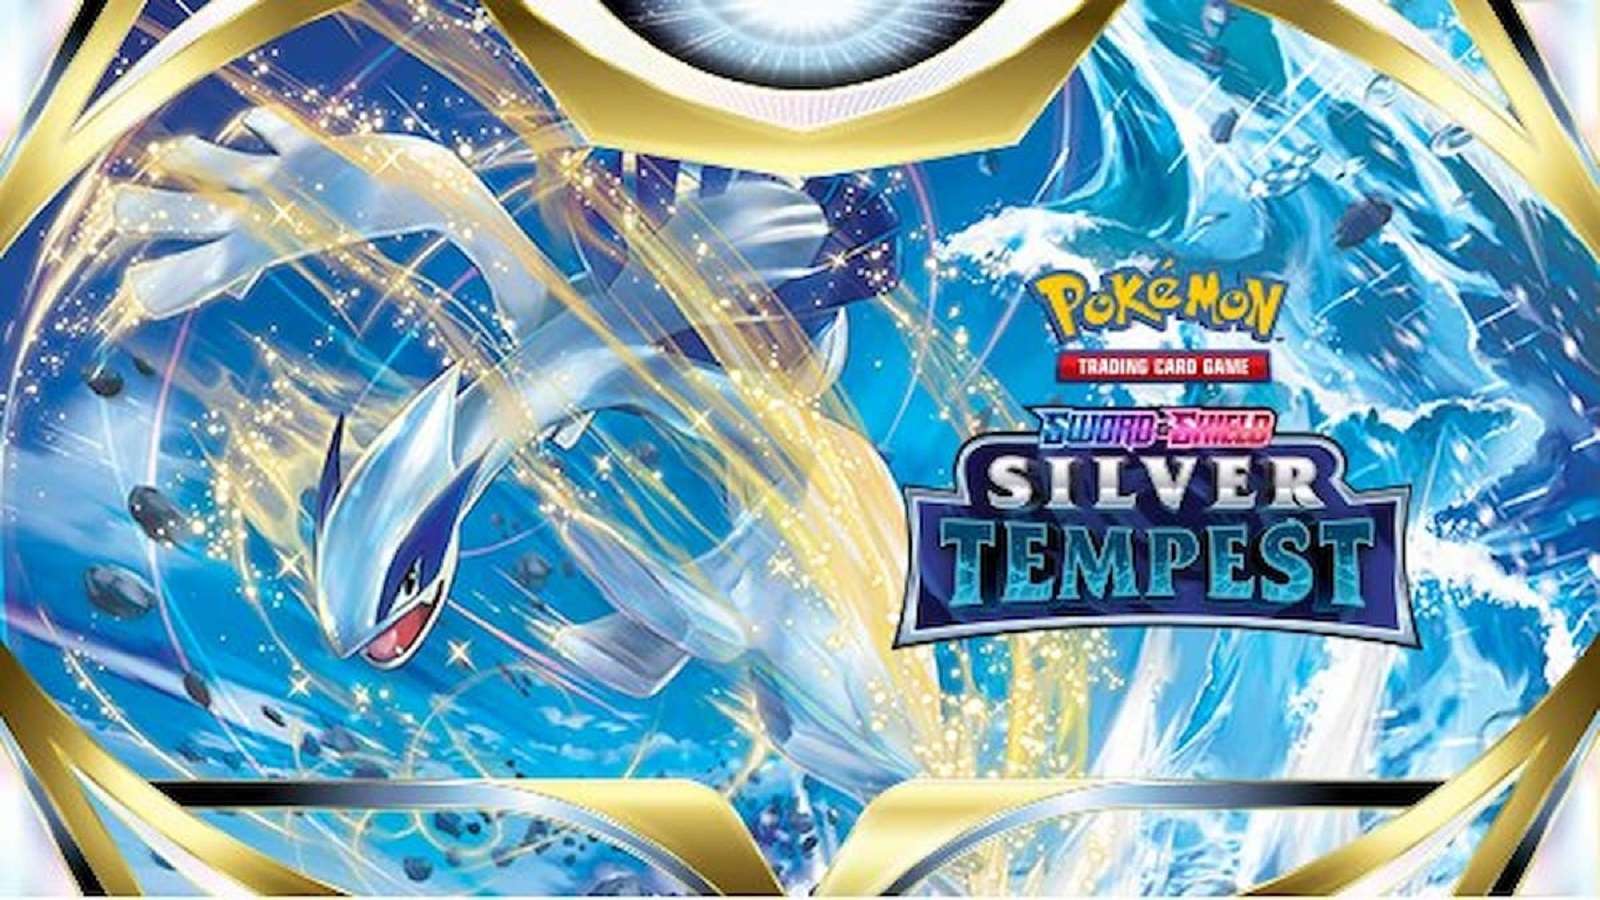 Silver Tempest Pokemon TCG expansion